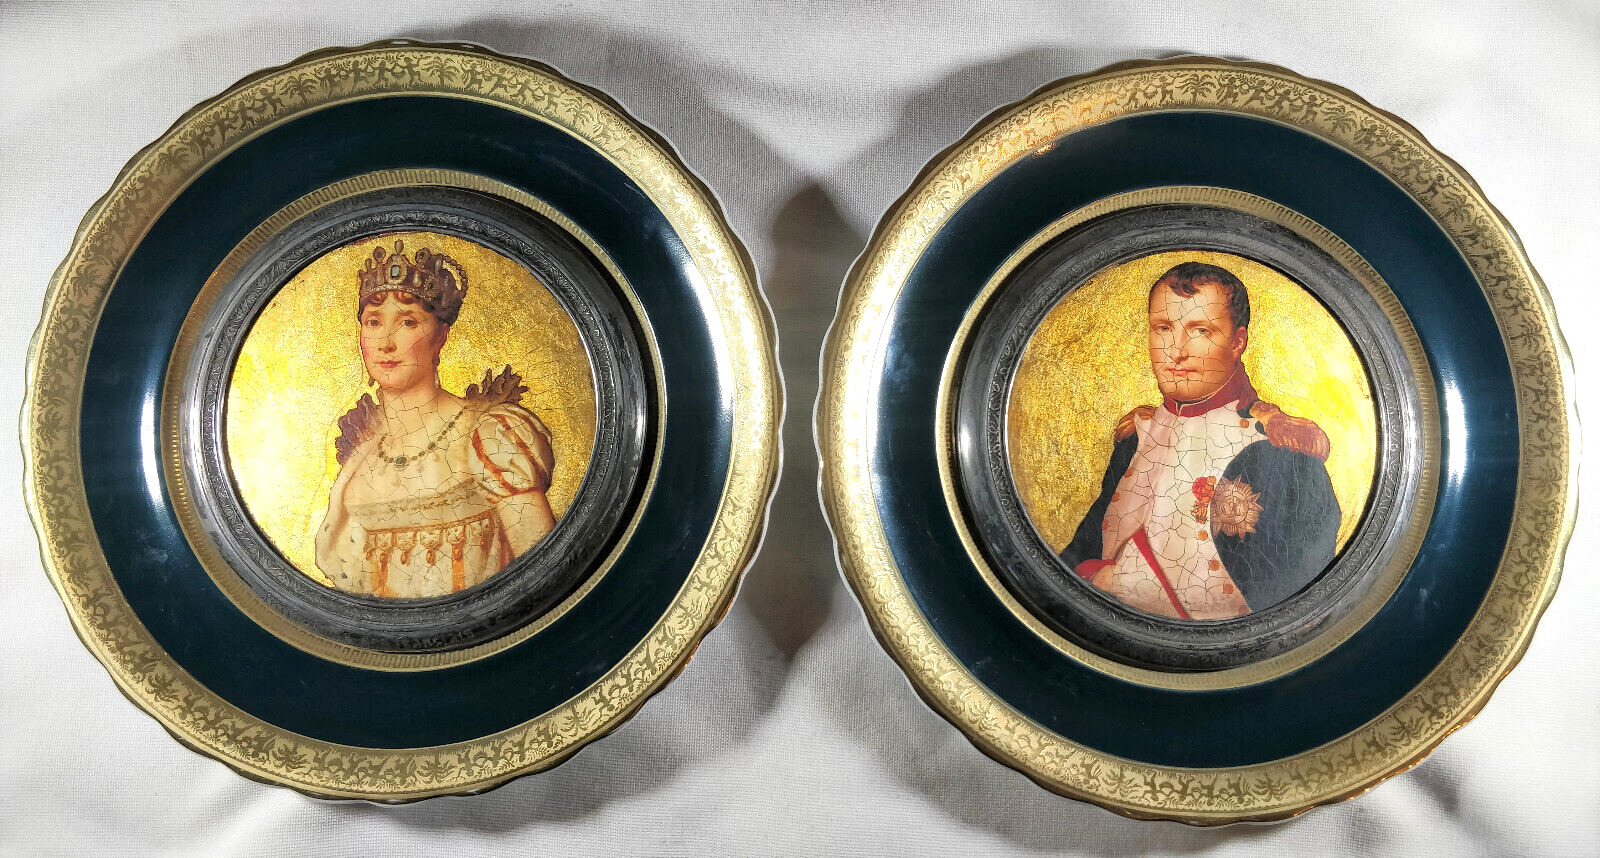  Portraits Napoleon Bonaparte and Josephine Josephine Beauharnais. 